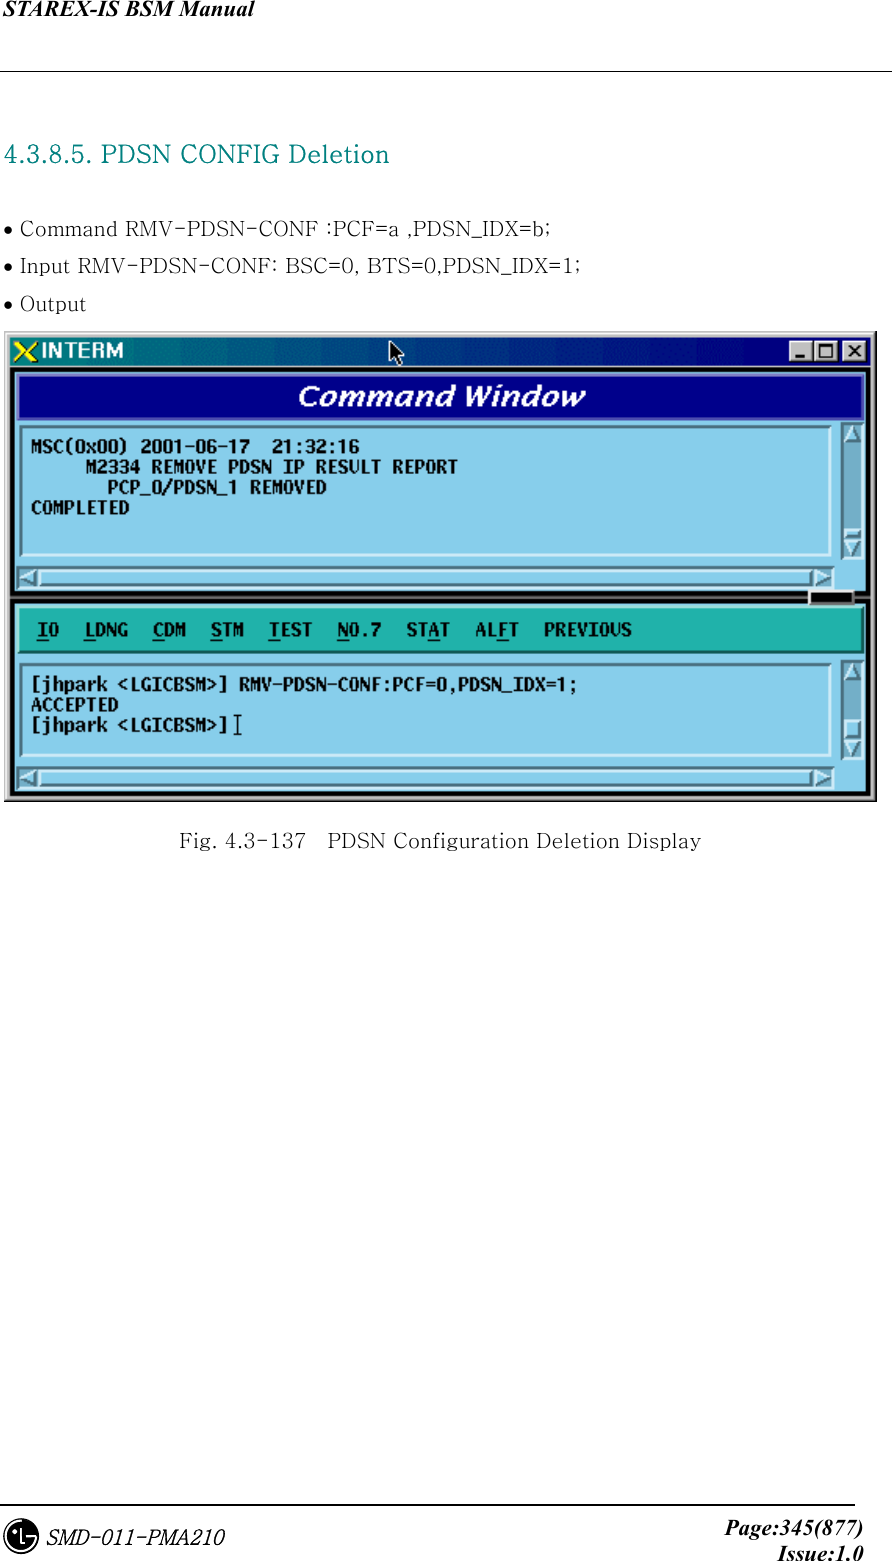 STAREX-IS BSM Manual     Page:345(877)Issue:1.0SMD-011-PMA210  4.3.8.5. PDSN CONFIG Deletion   • Command RMV-PDSN-CONF :PCF=a ,PDSN_IDX=b; • Input RMV-PDSN-CONF: BSC=0, BTS=0,PDSN_IDX=1; • Output  Fig. 4.3-137    PDSN Configuration Deletion Display